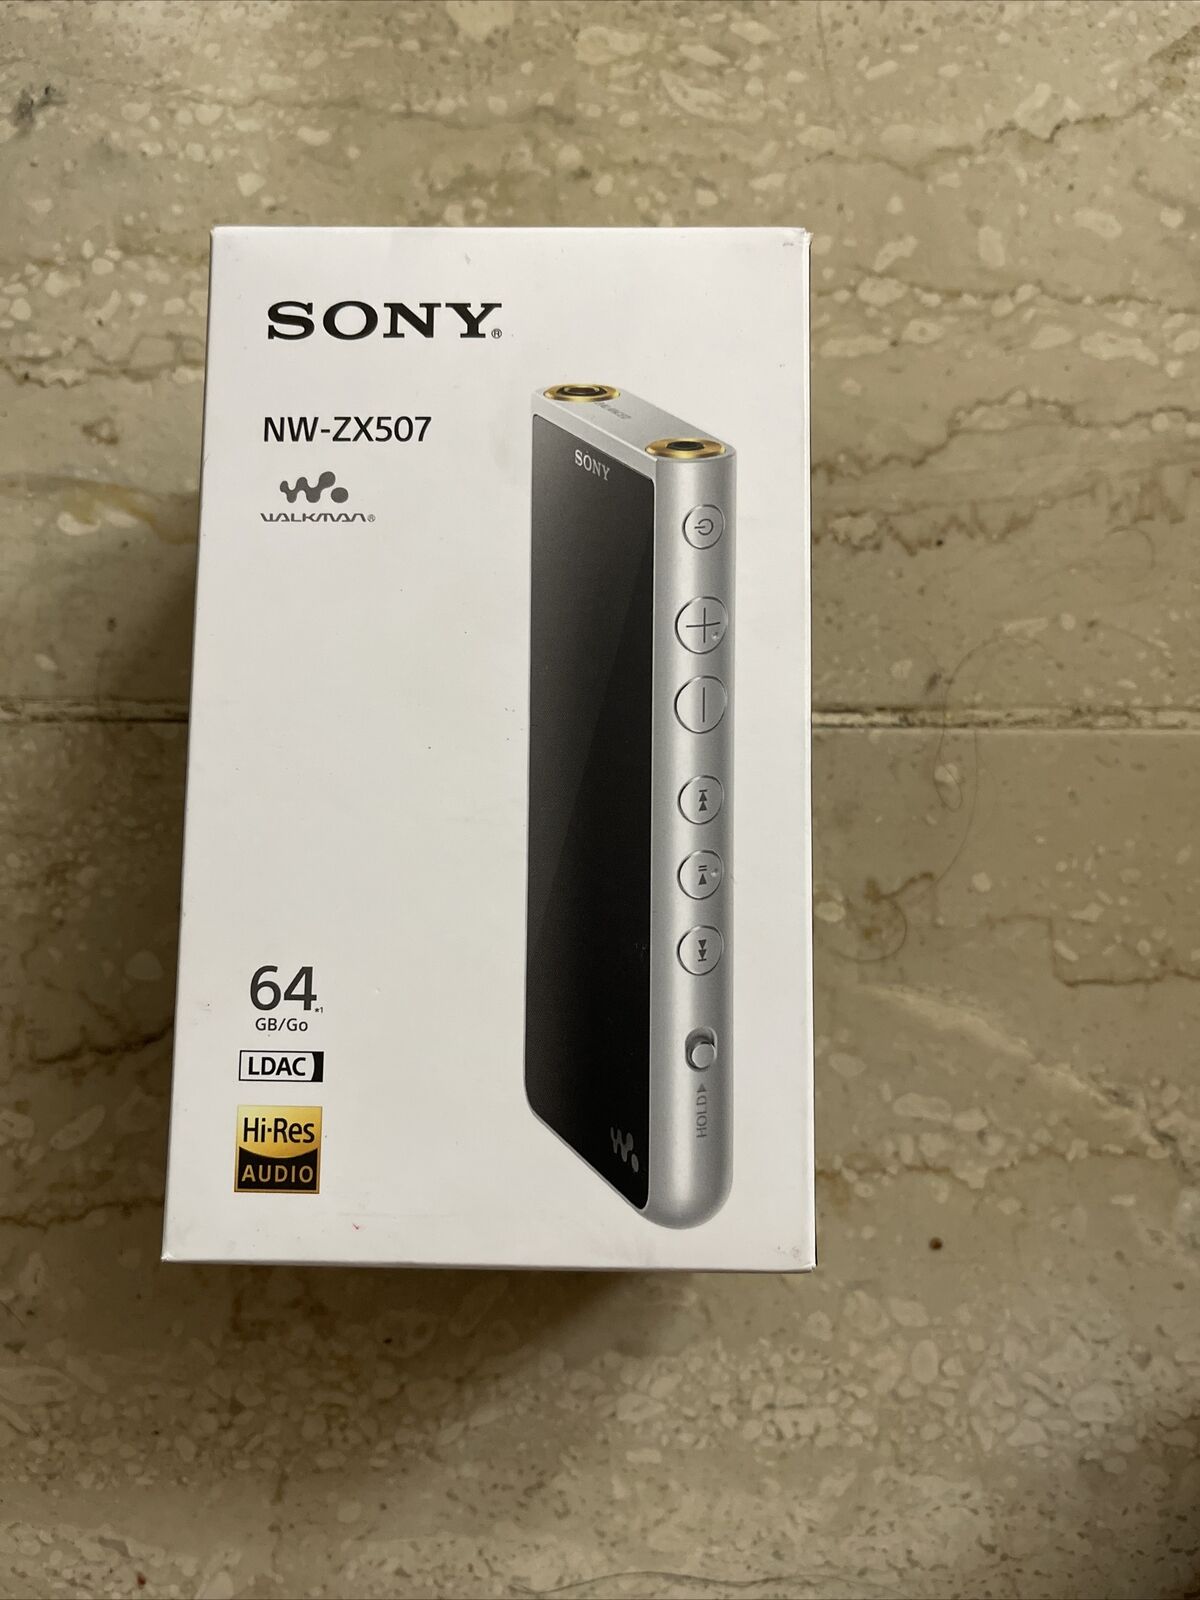 Sony NW-ZX507 ZX Series Walkman 64 GB for sale online | eBay